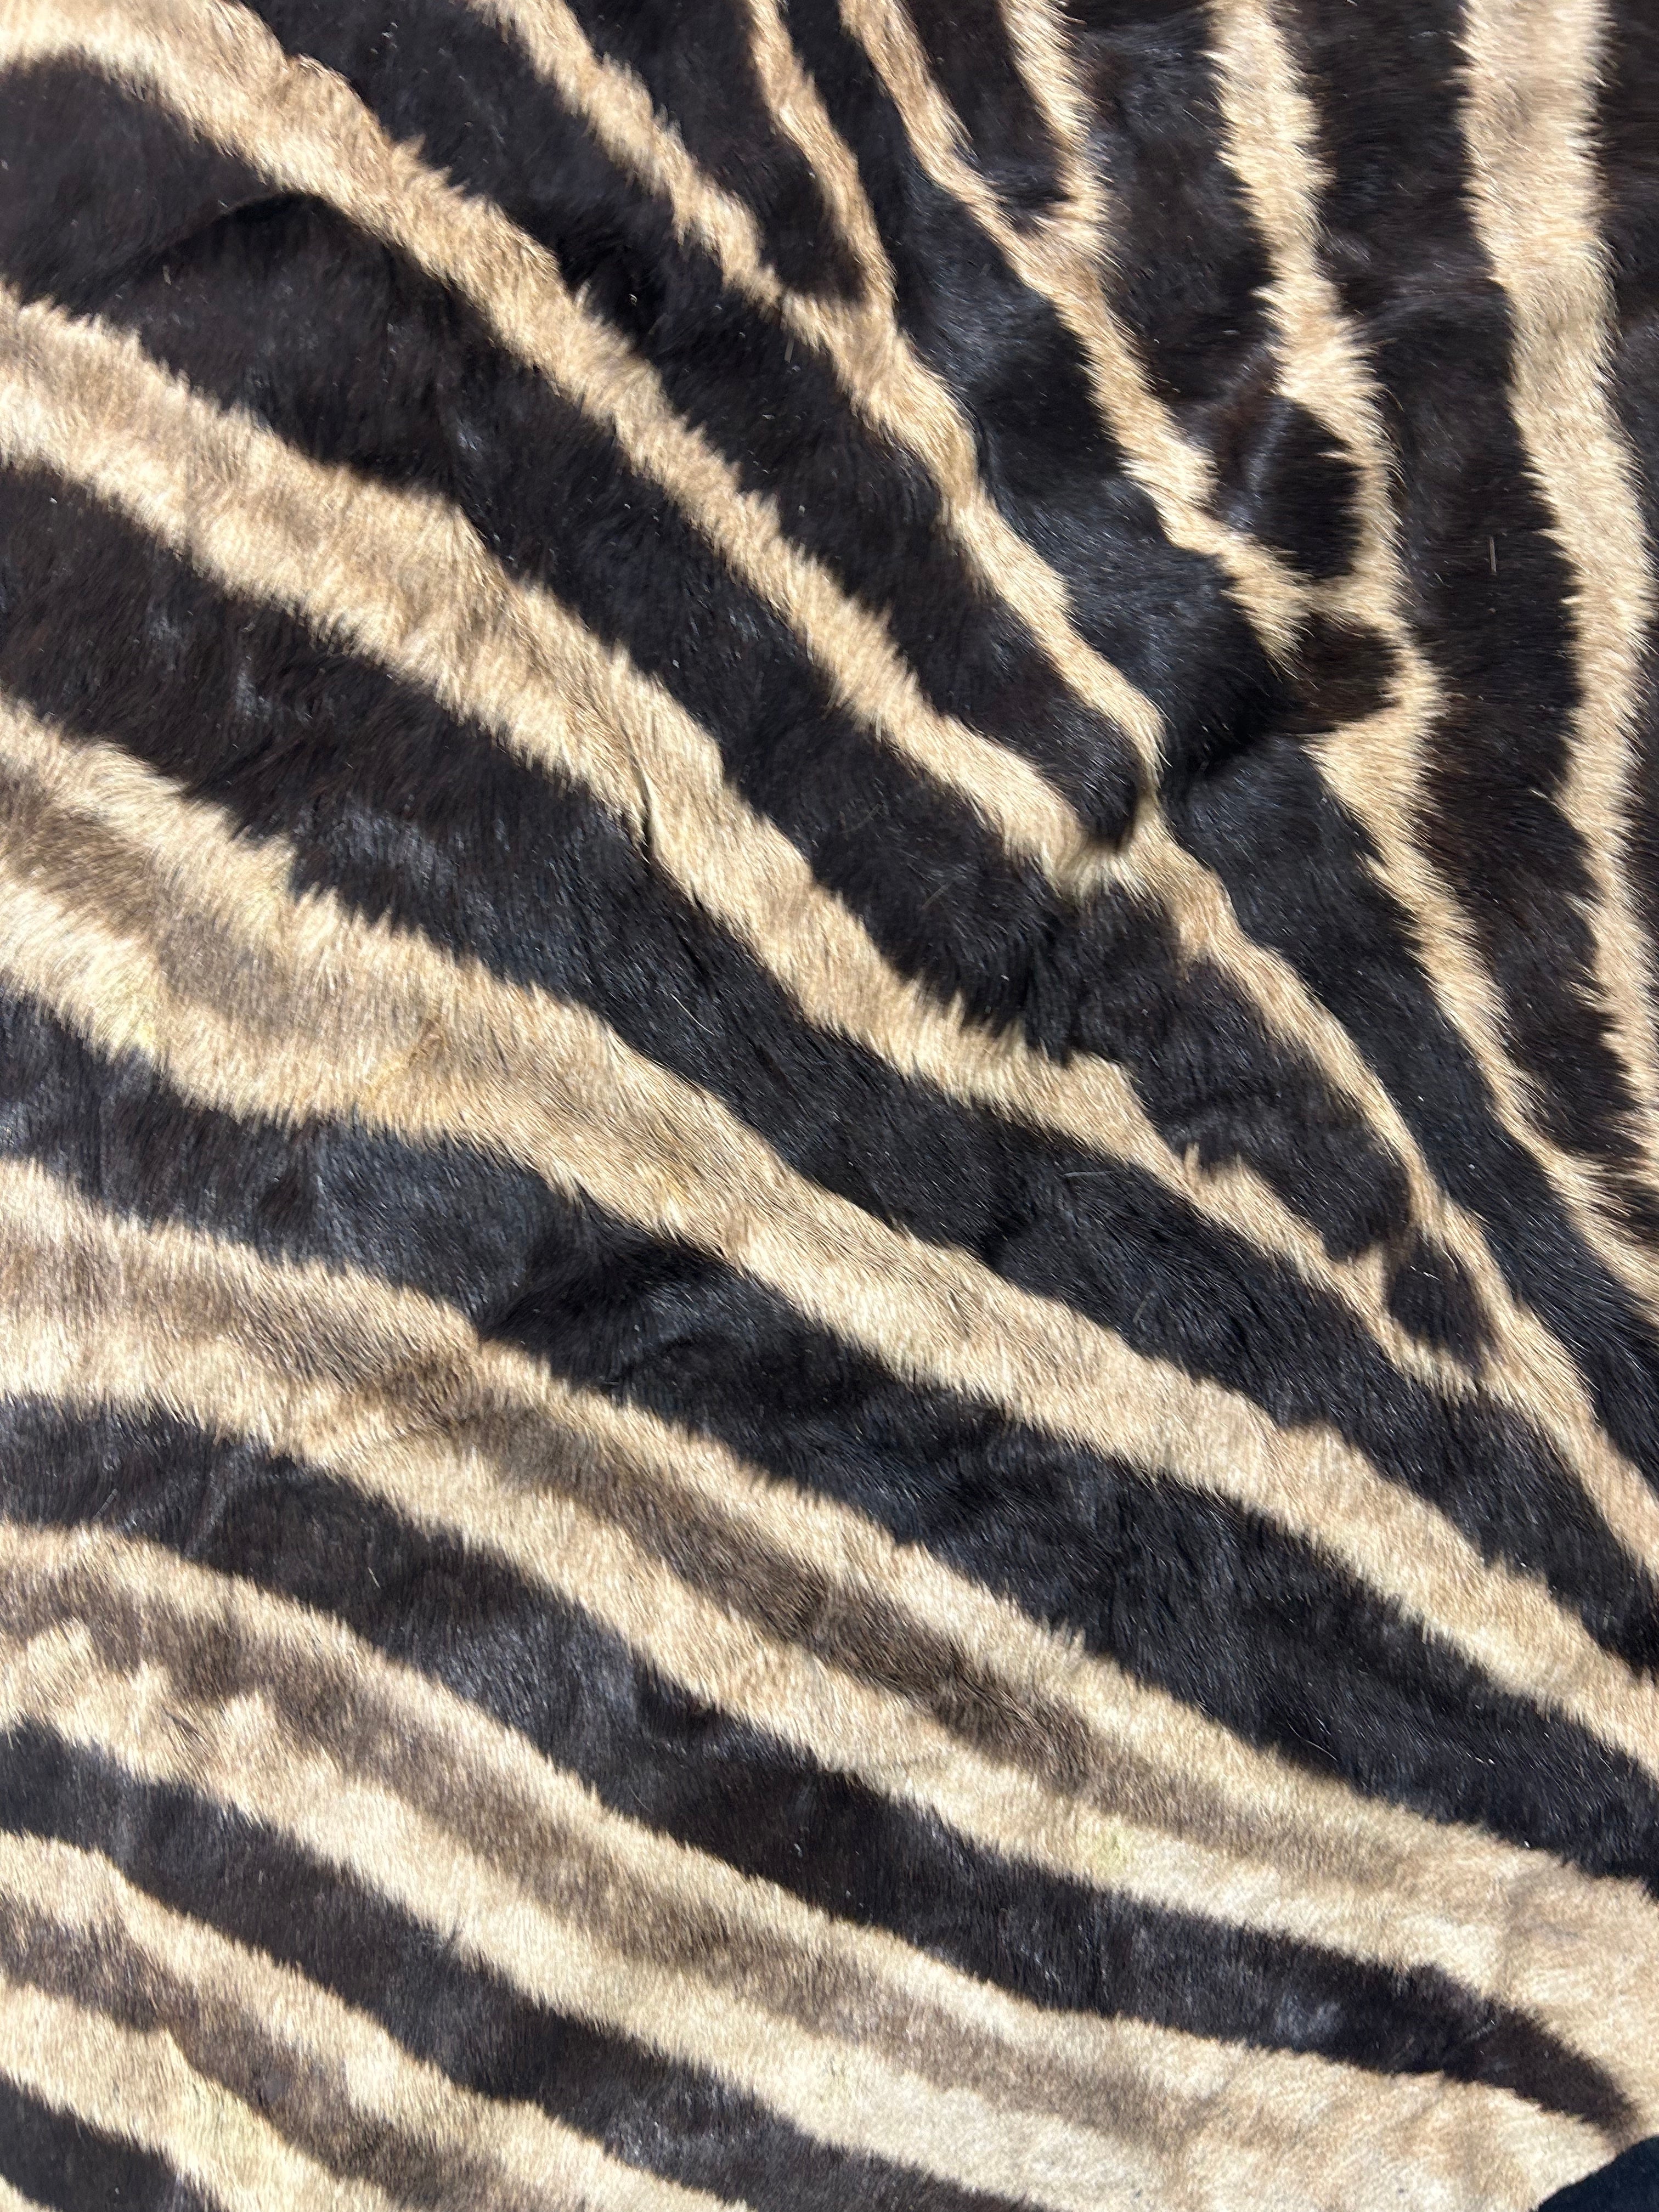 Real zebra skin Rug # 142- Size (7 3/4 X 7 feet) - Brand New Burchell's zebra hide